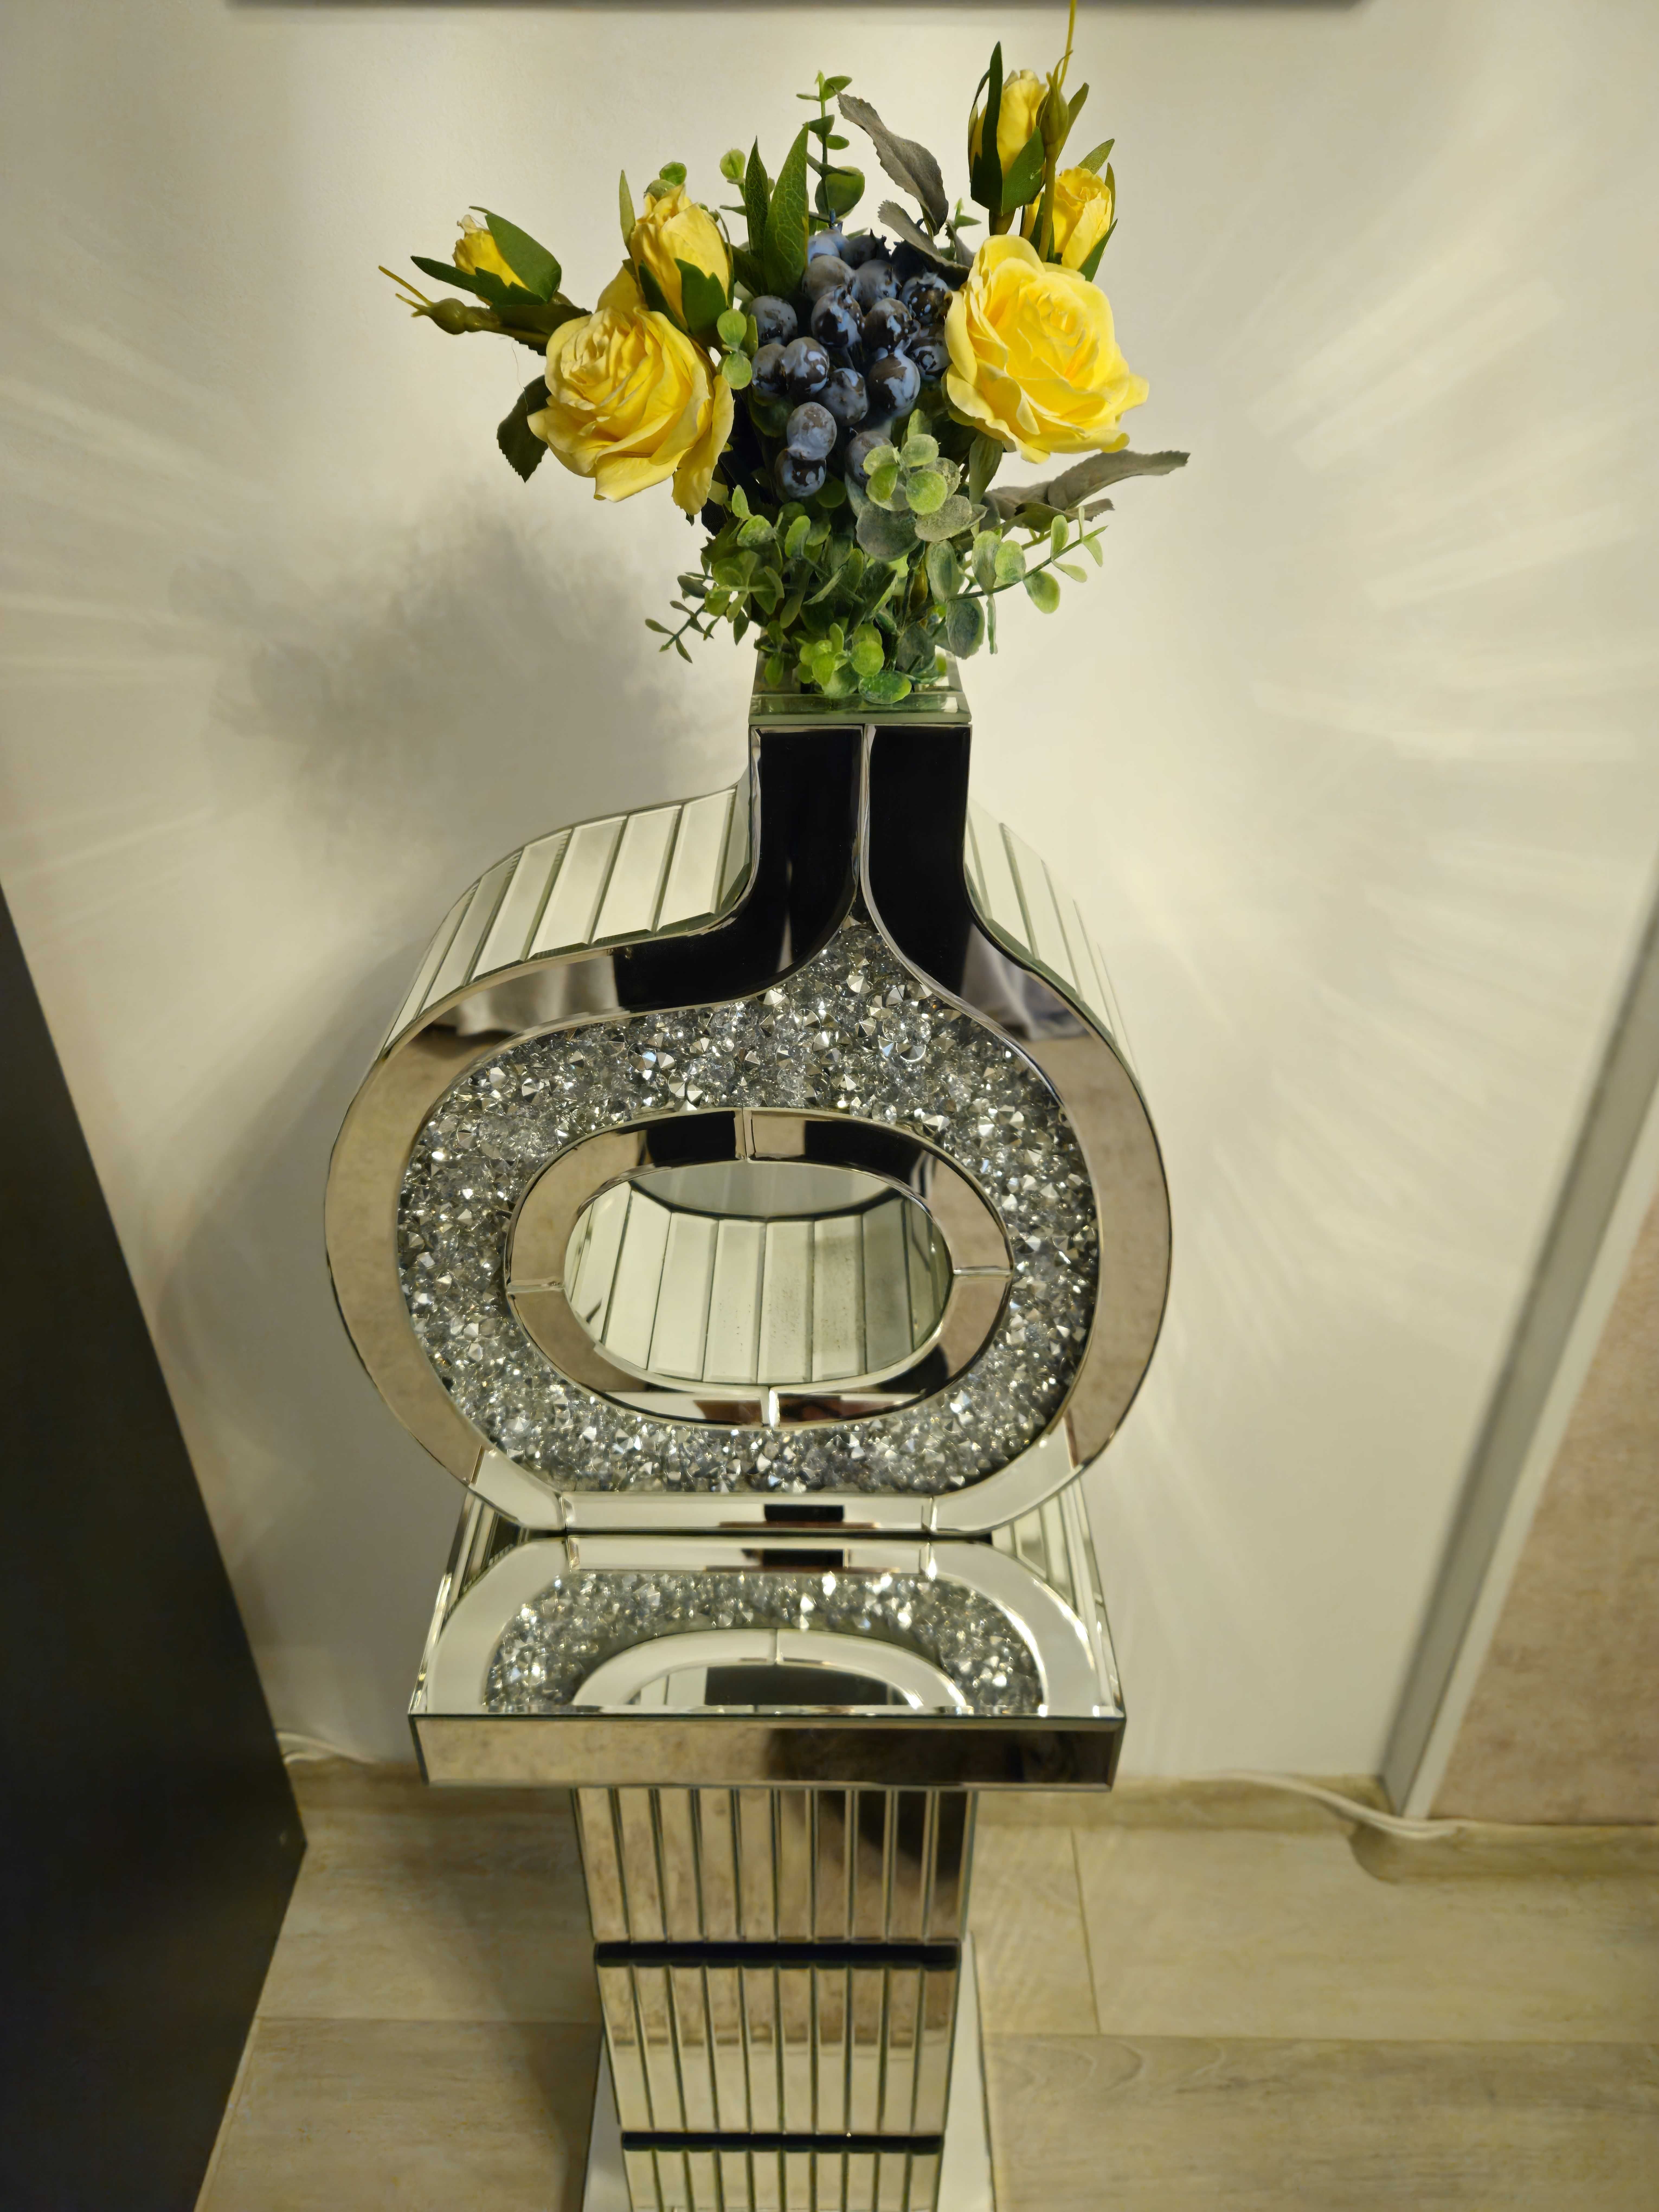 Anasamblu decorativ compus din suport si vaza din oglinda.